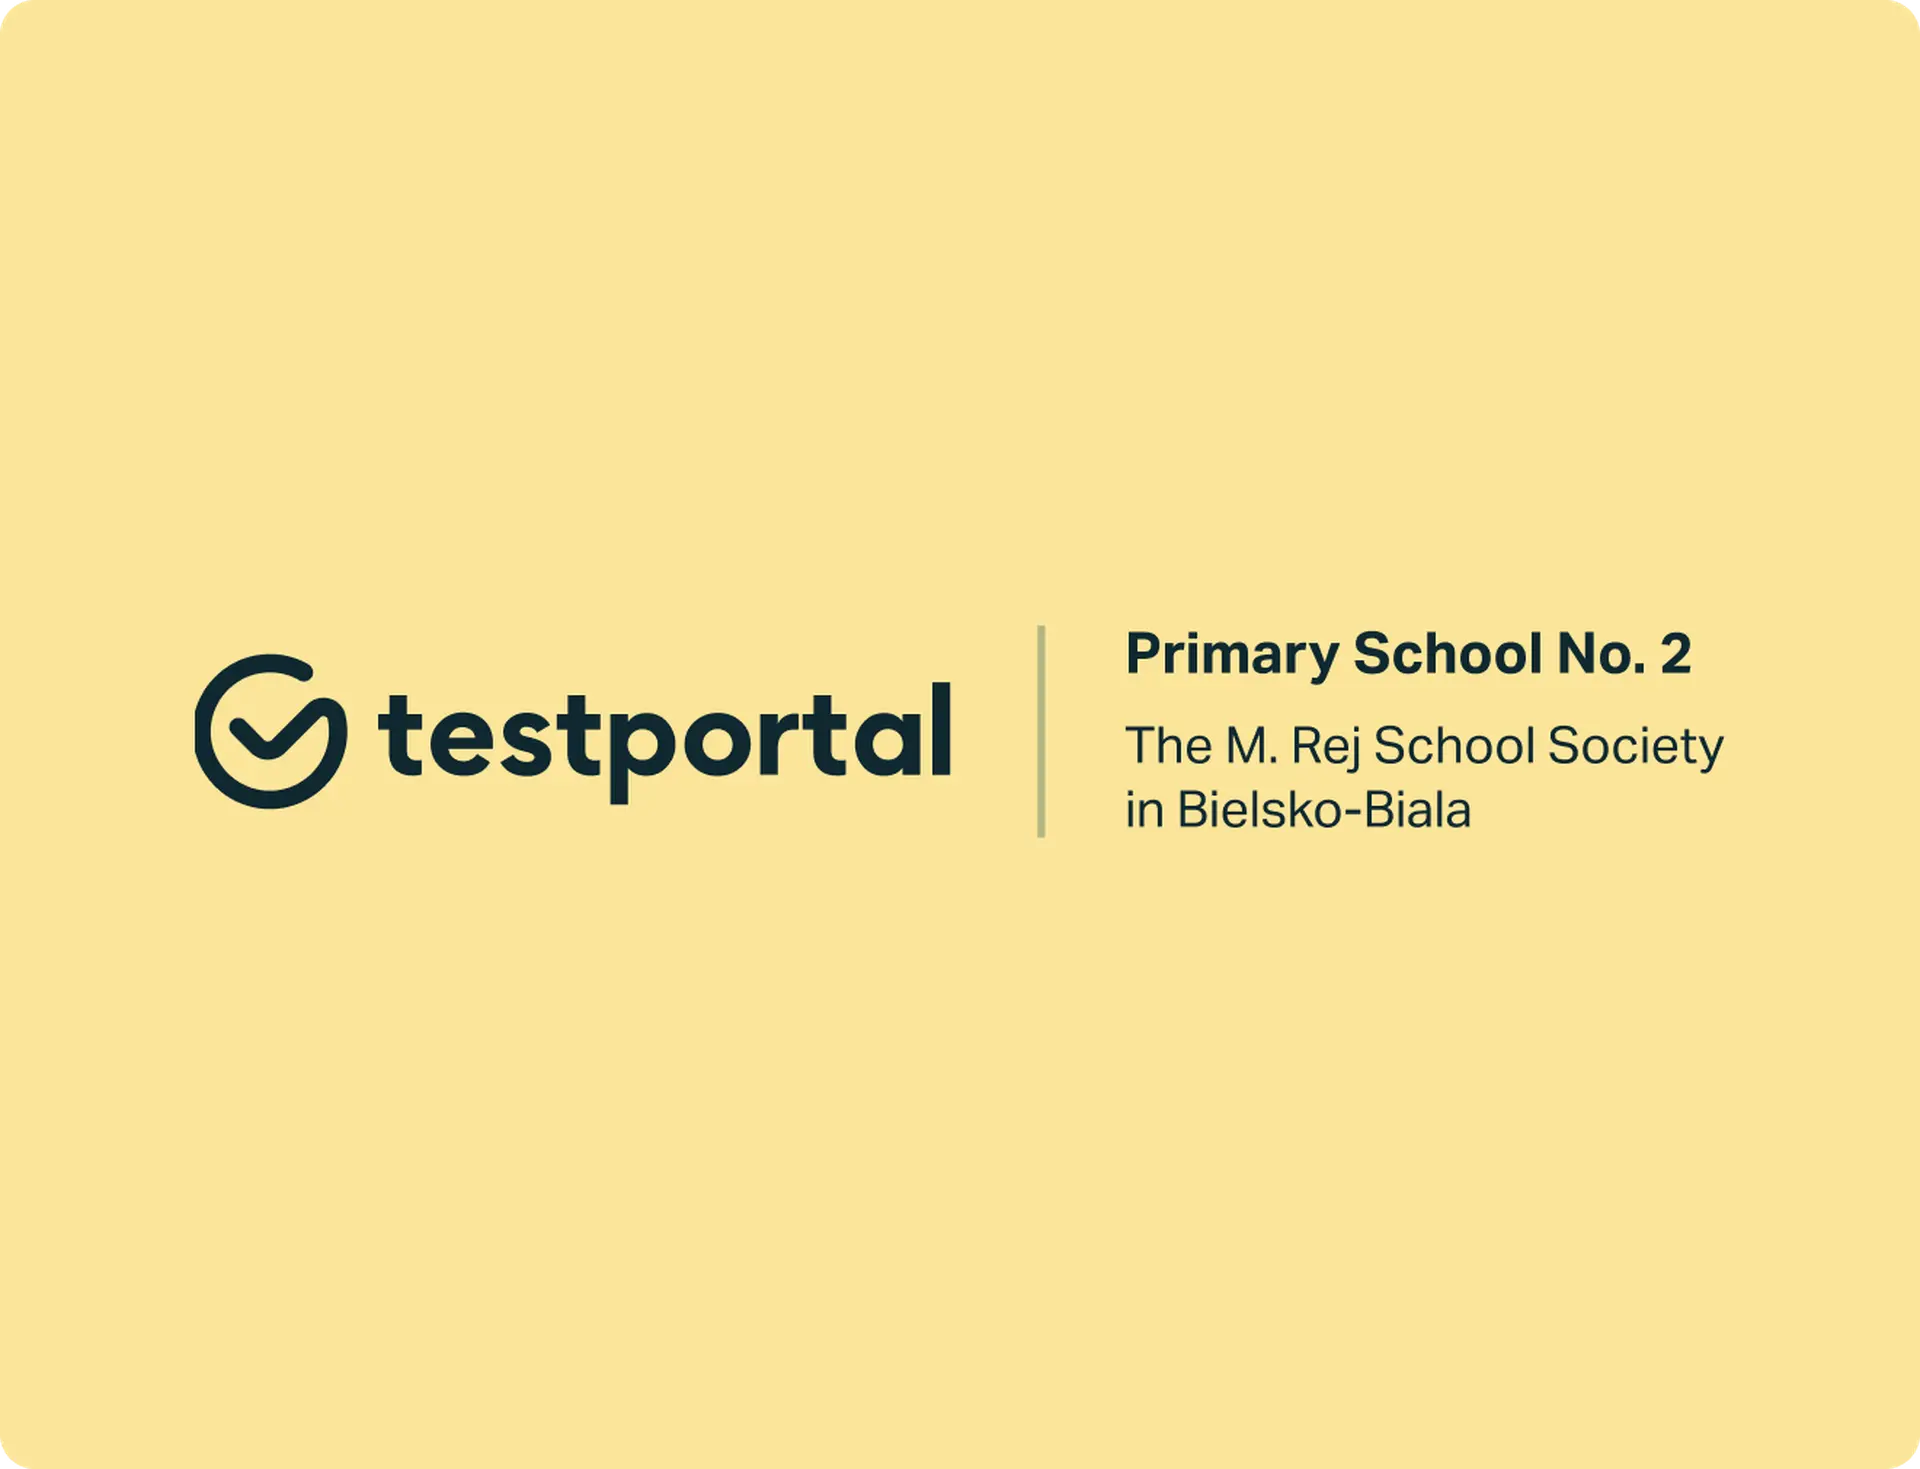 Testportal and Primary School Nr 2 logos.